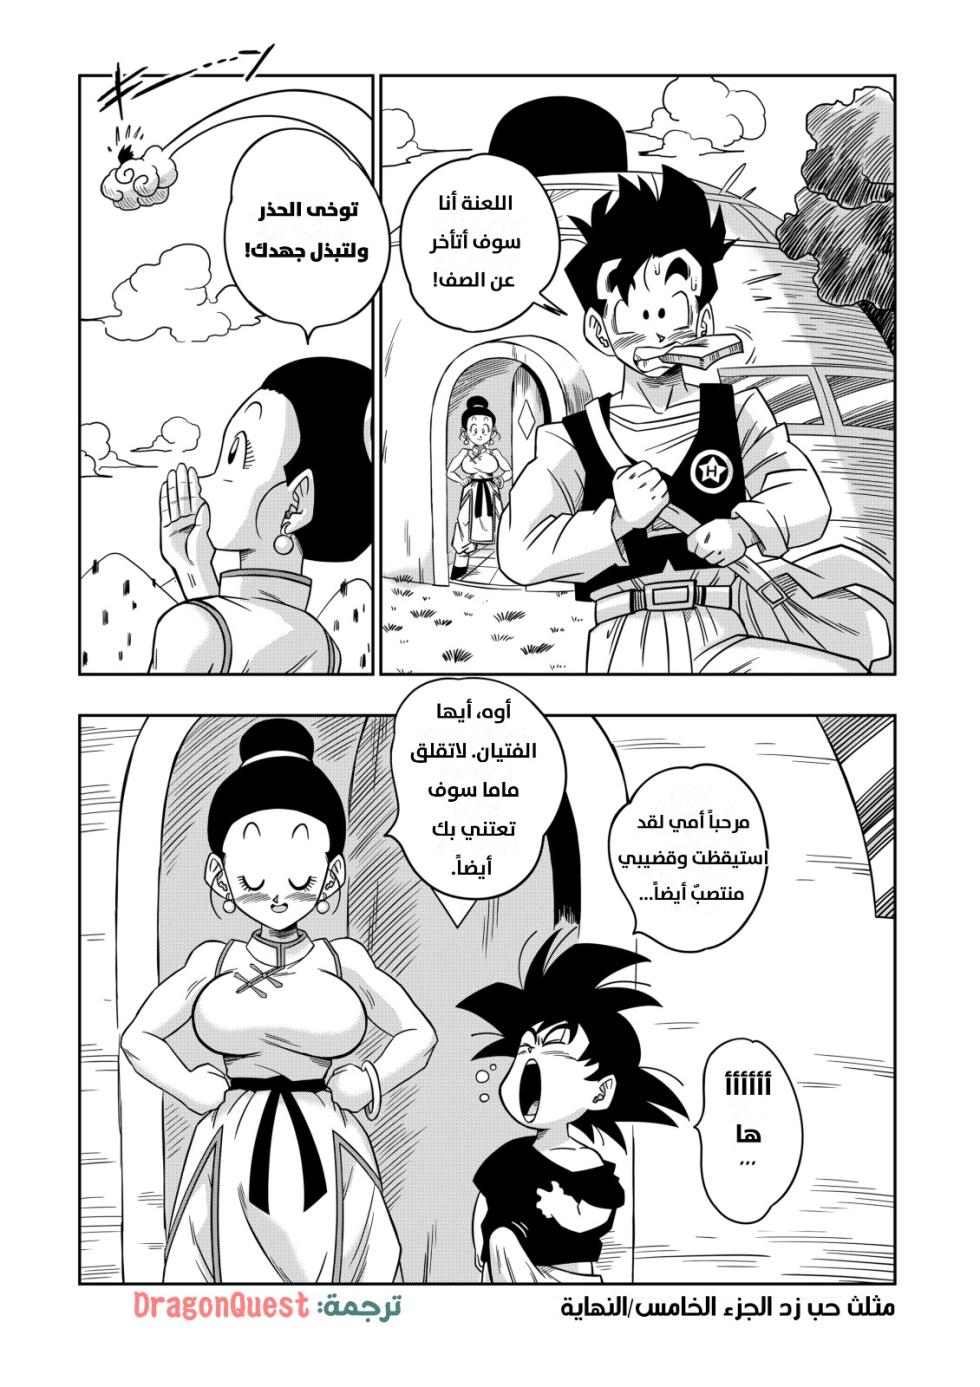 LOVE TRIANGLE Z PART 5 (Dragon Ball Z) - Page 18